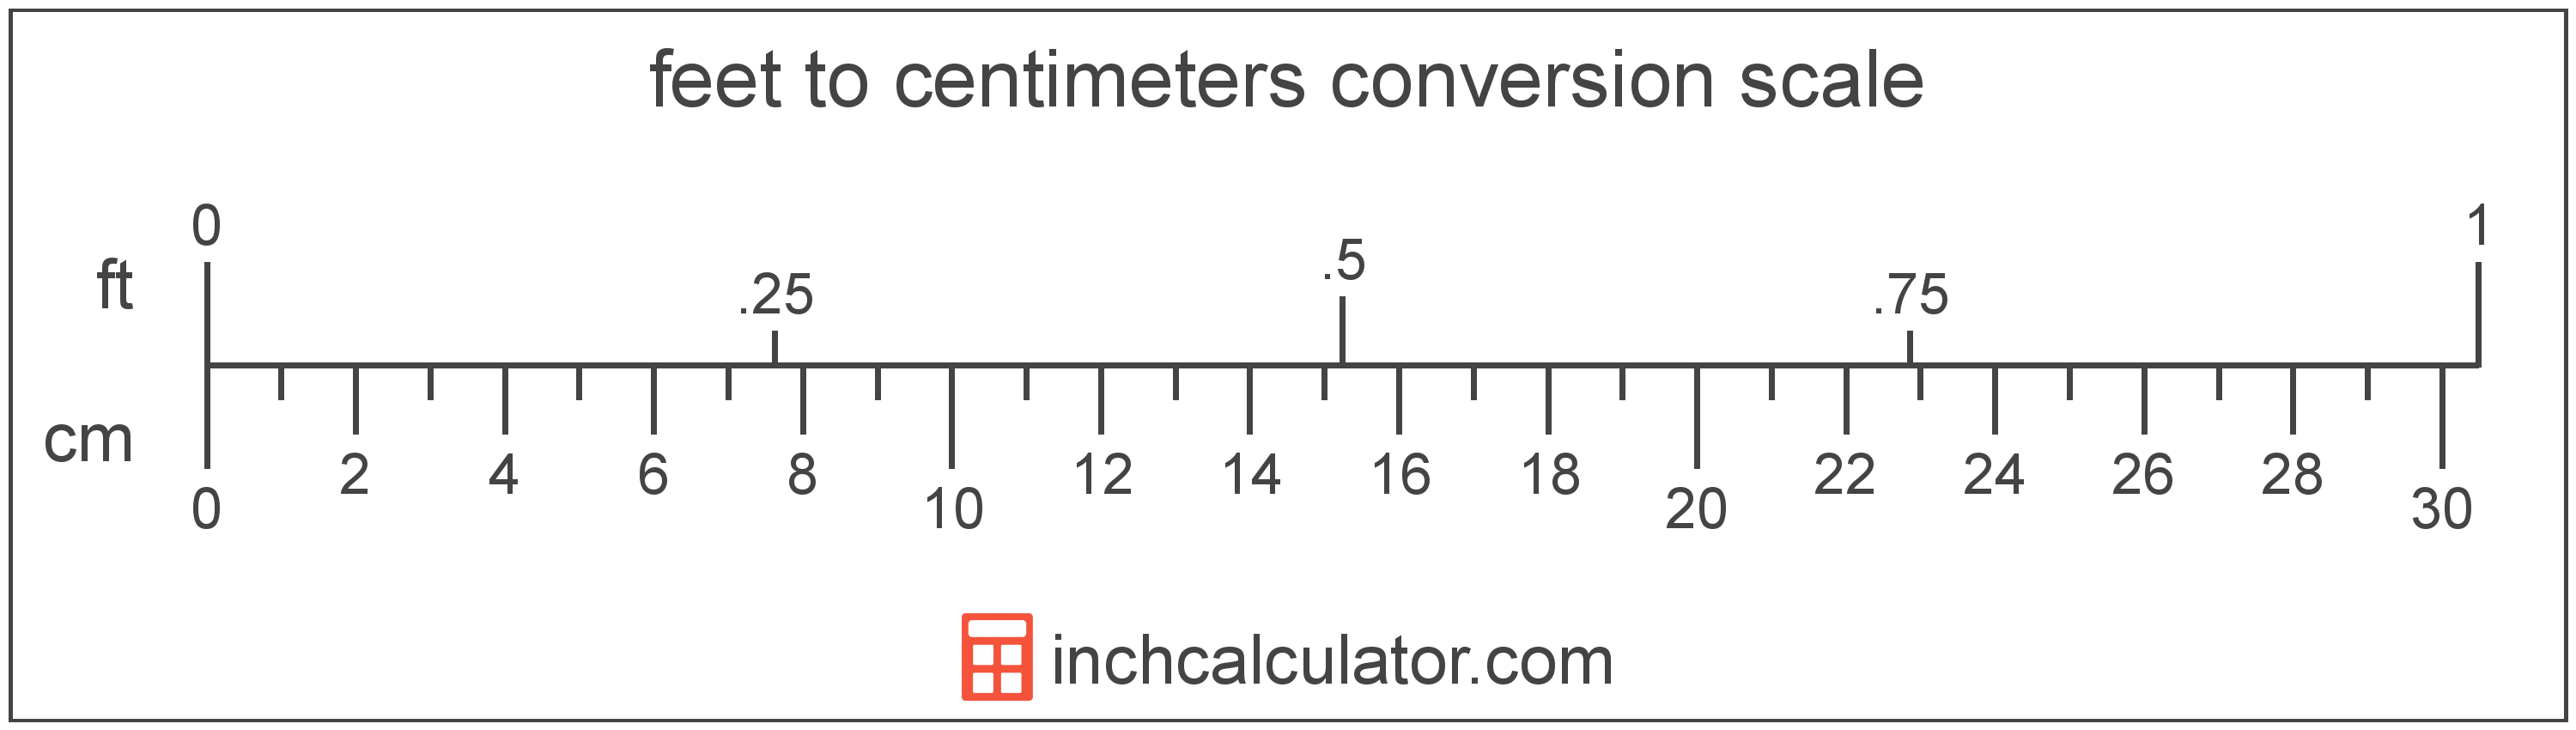 feet to cm conversion chart